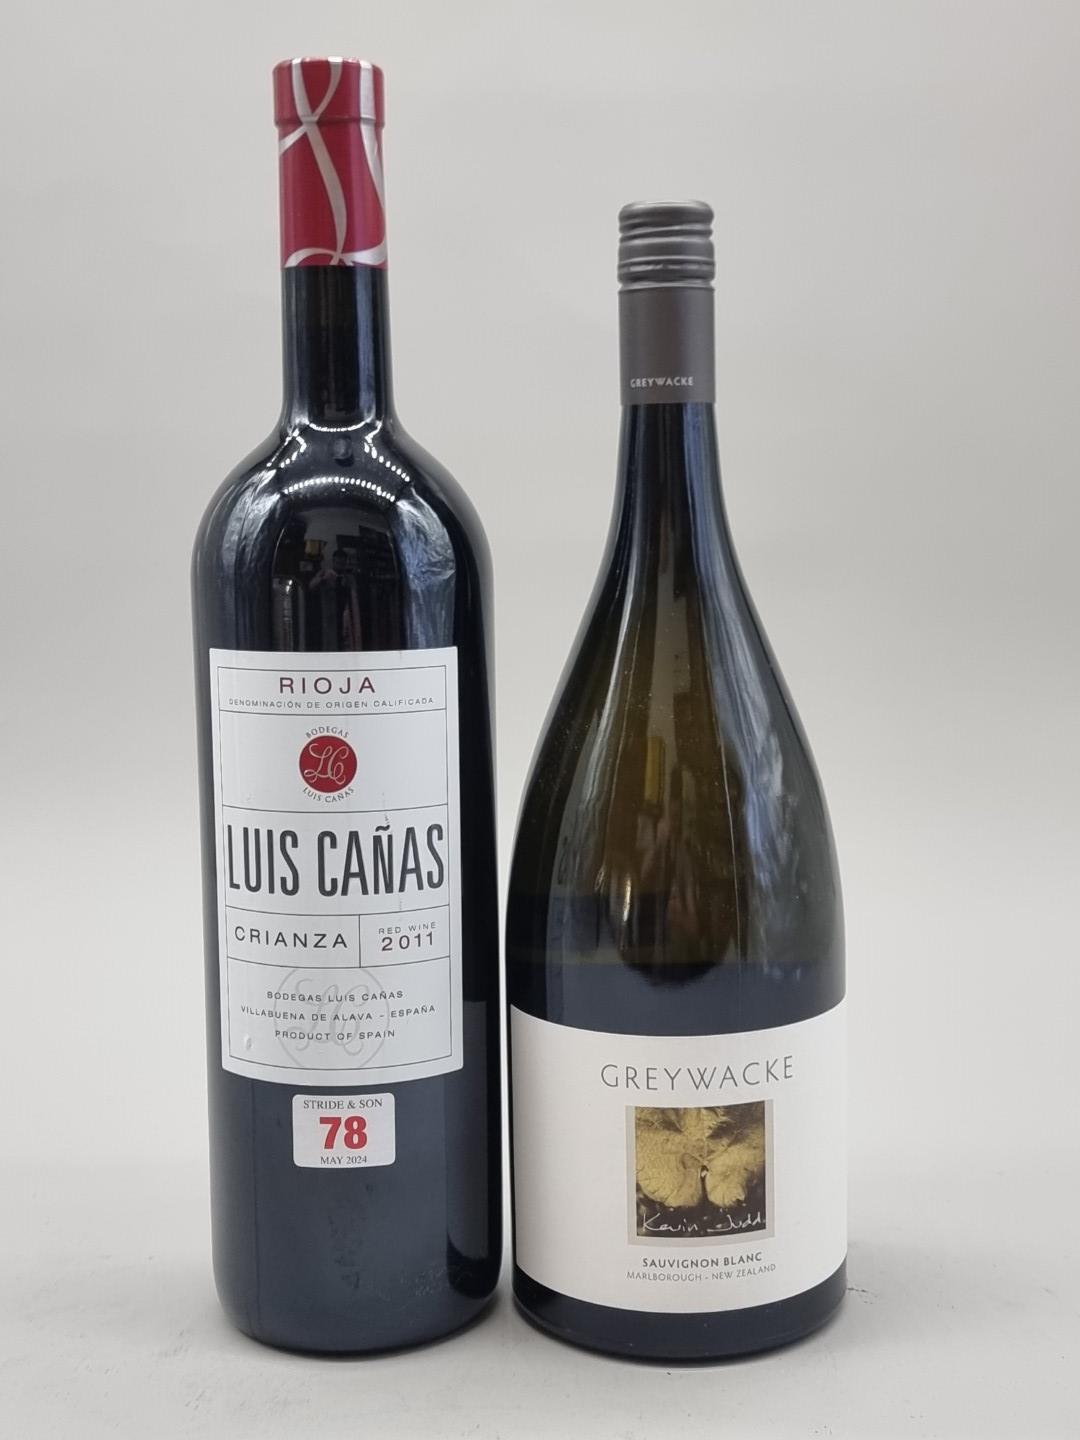 A 150cl magnum bottle of Luis Canas Crianza Rioja, 2011; together with a 150cl magnum bottle of